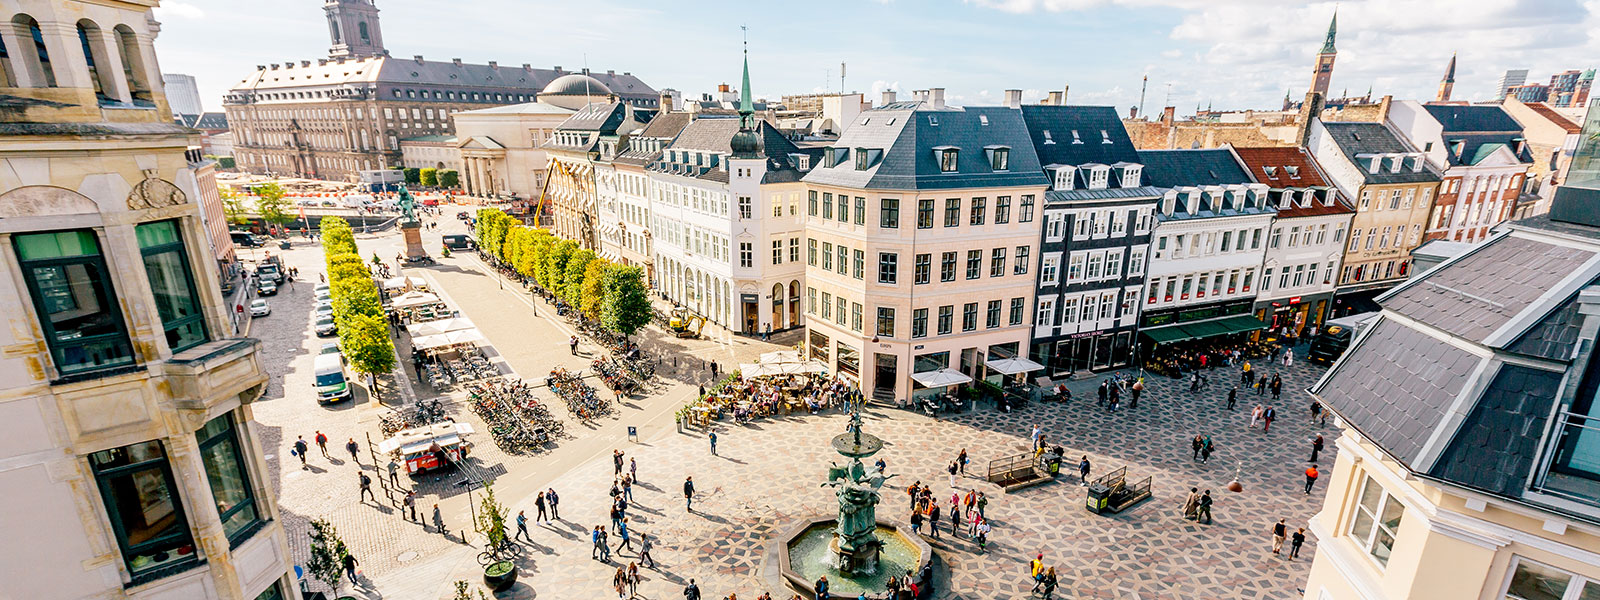 Denmark city image